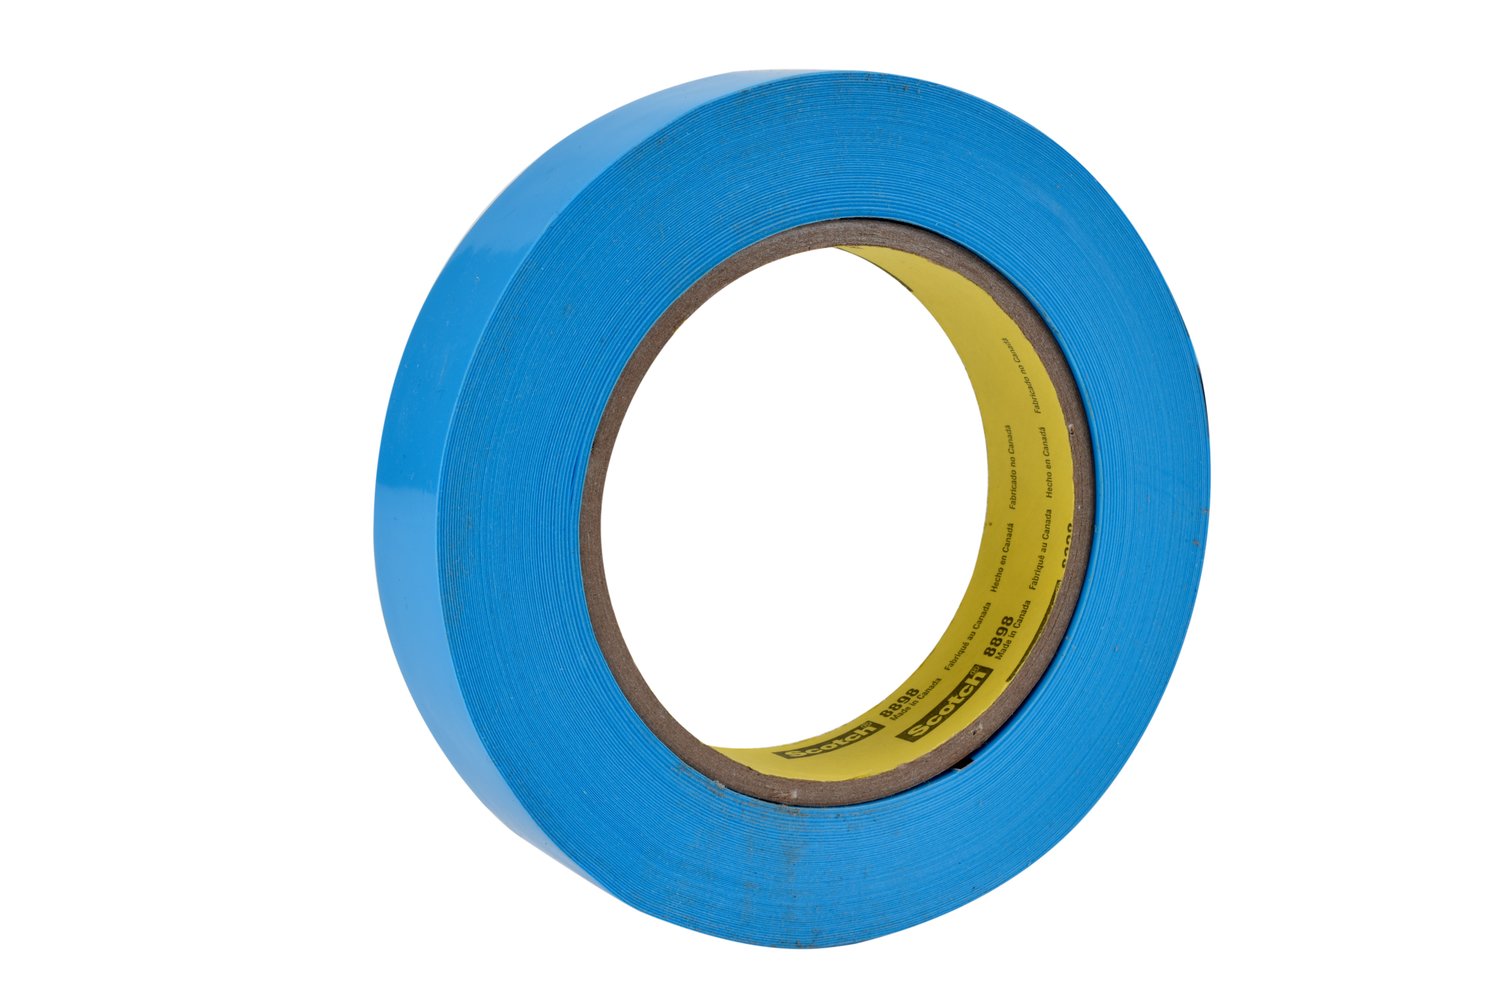 7000042791 - Scotch Strapping Tape 8898, Blue, 12 mm x 55 m, 4.6 mil, 72 rolls per
case